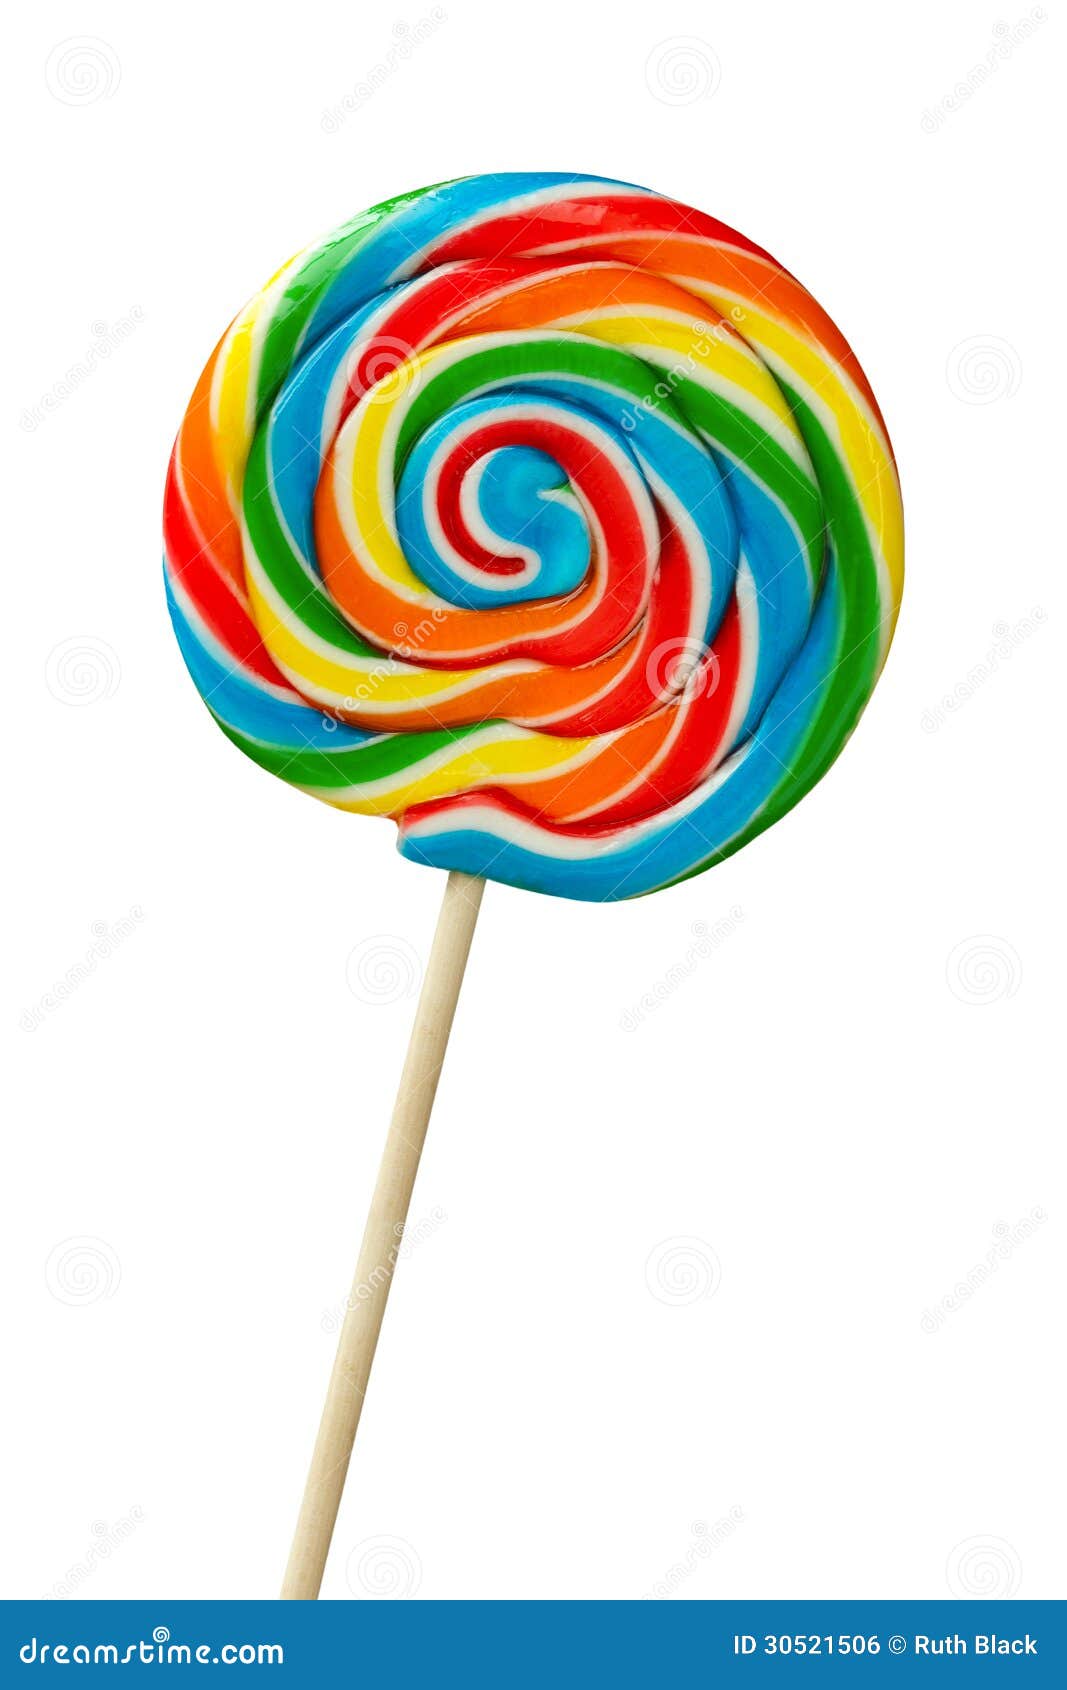 Lollipop Royalty Free Stock Image - Image: 30521506